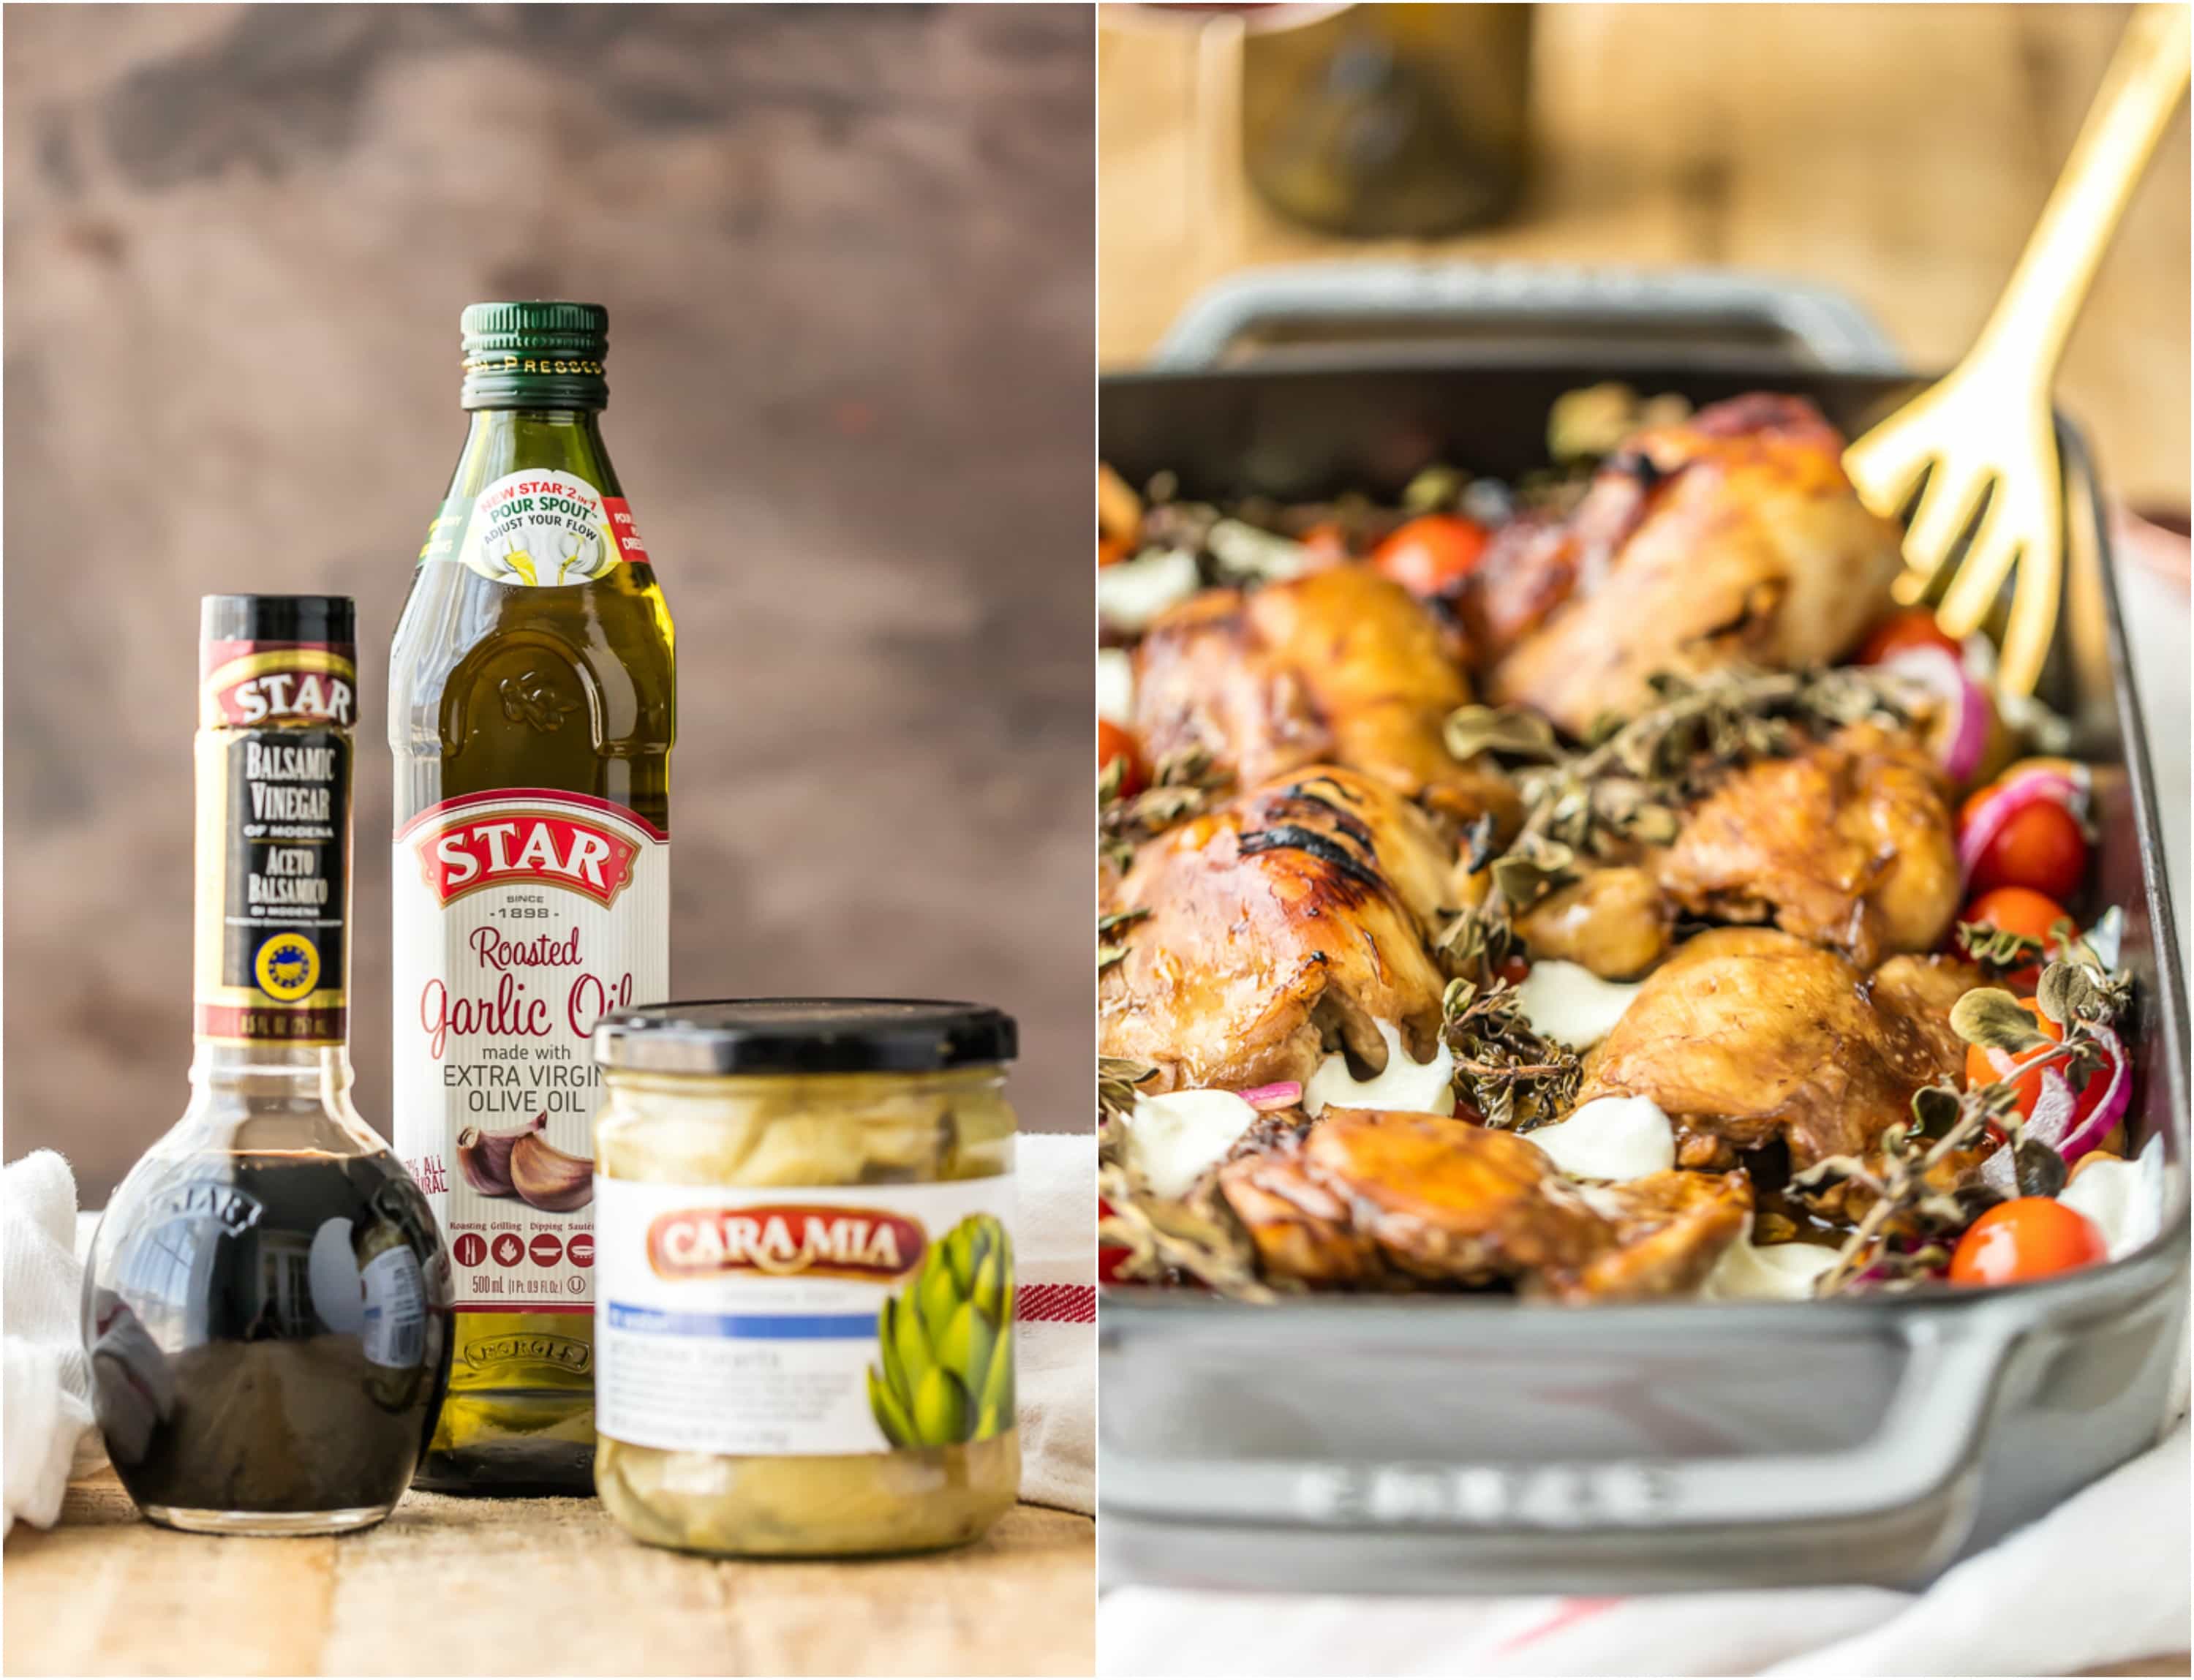 photo collage - Balsamic Glazed Mediterranean Chicken Bake and Star brand balsamic vinegar and olive oil